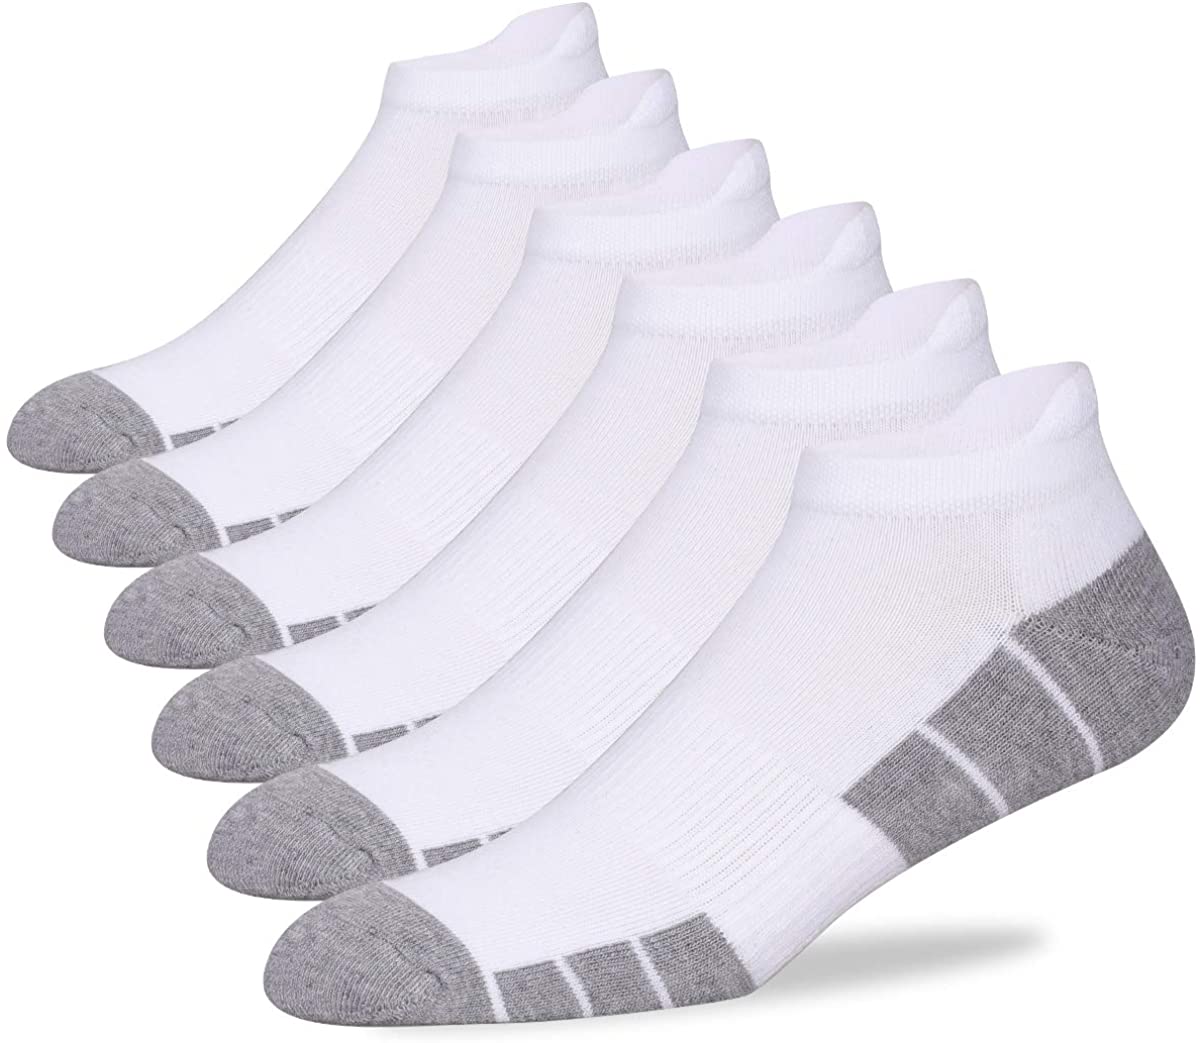 Eallco Mens Ankle Socks Low Cut Athletic Cushioned Running Tab Socks 6 Pack 